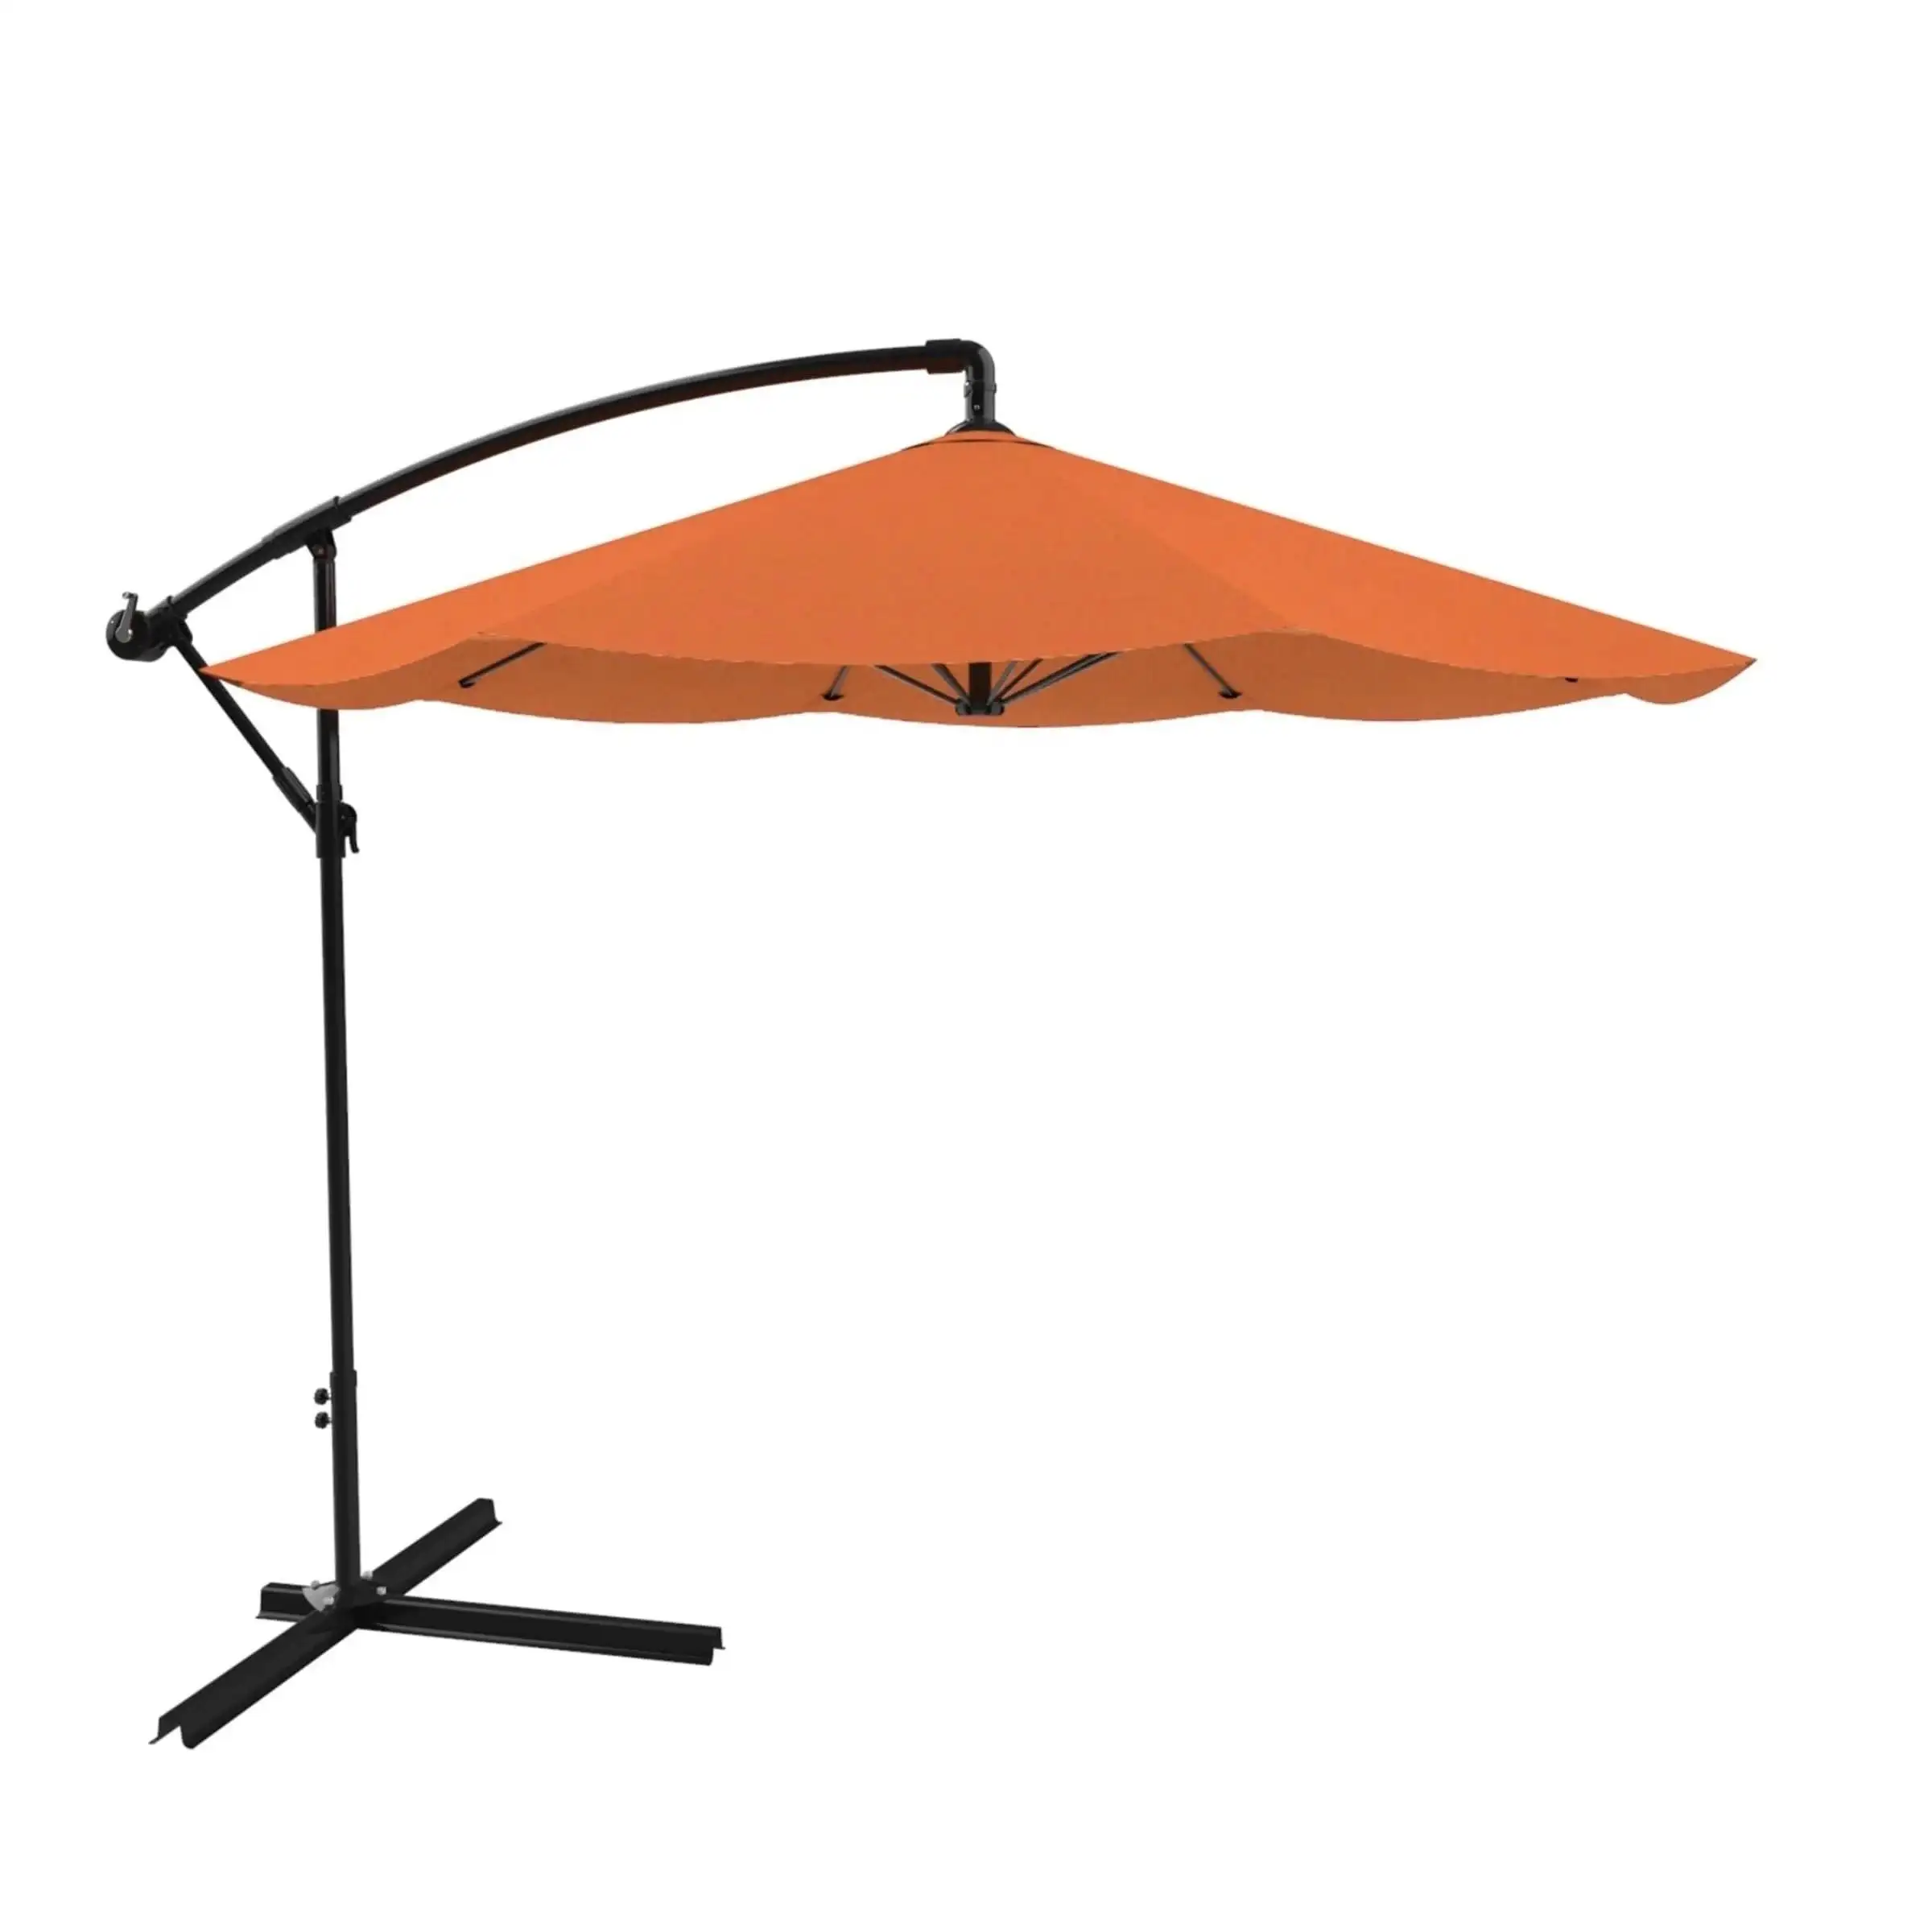 Barra de paraguas para gimnasio al aire libre, excelente estilo moderno, componentes muy grandes, para exterior